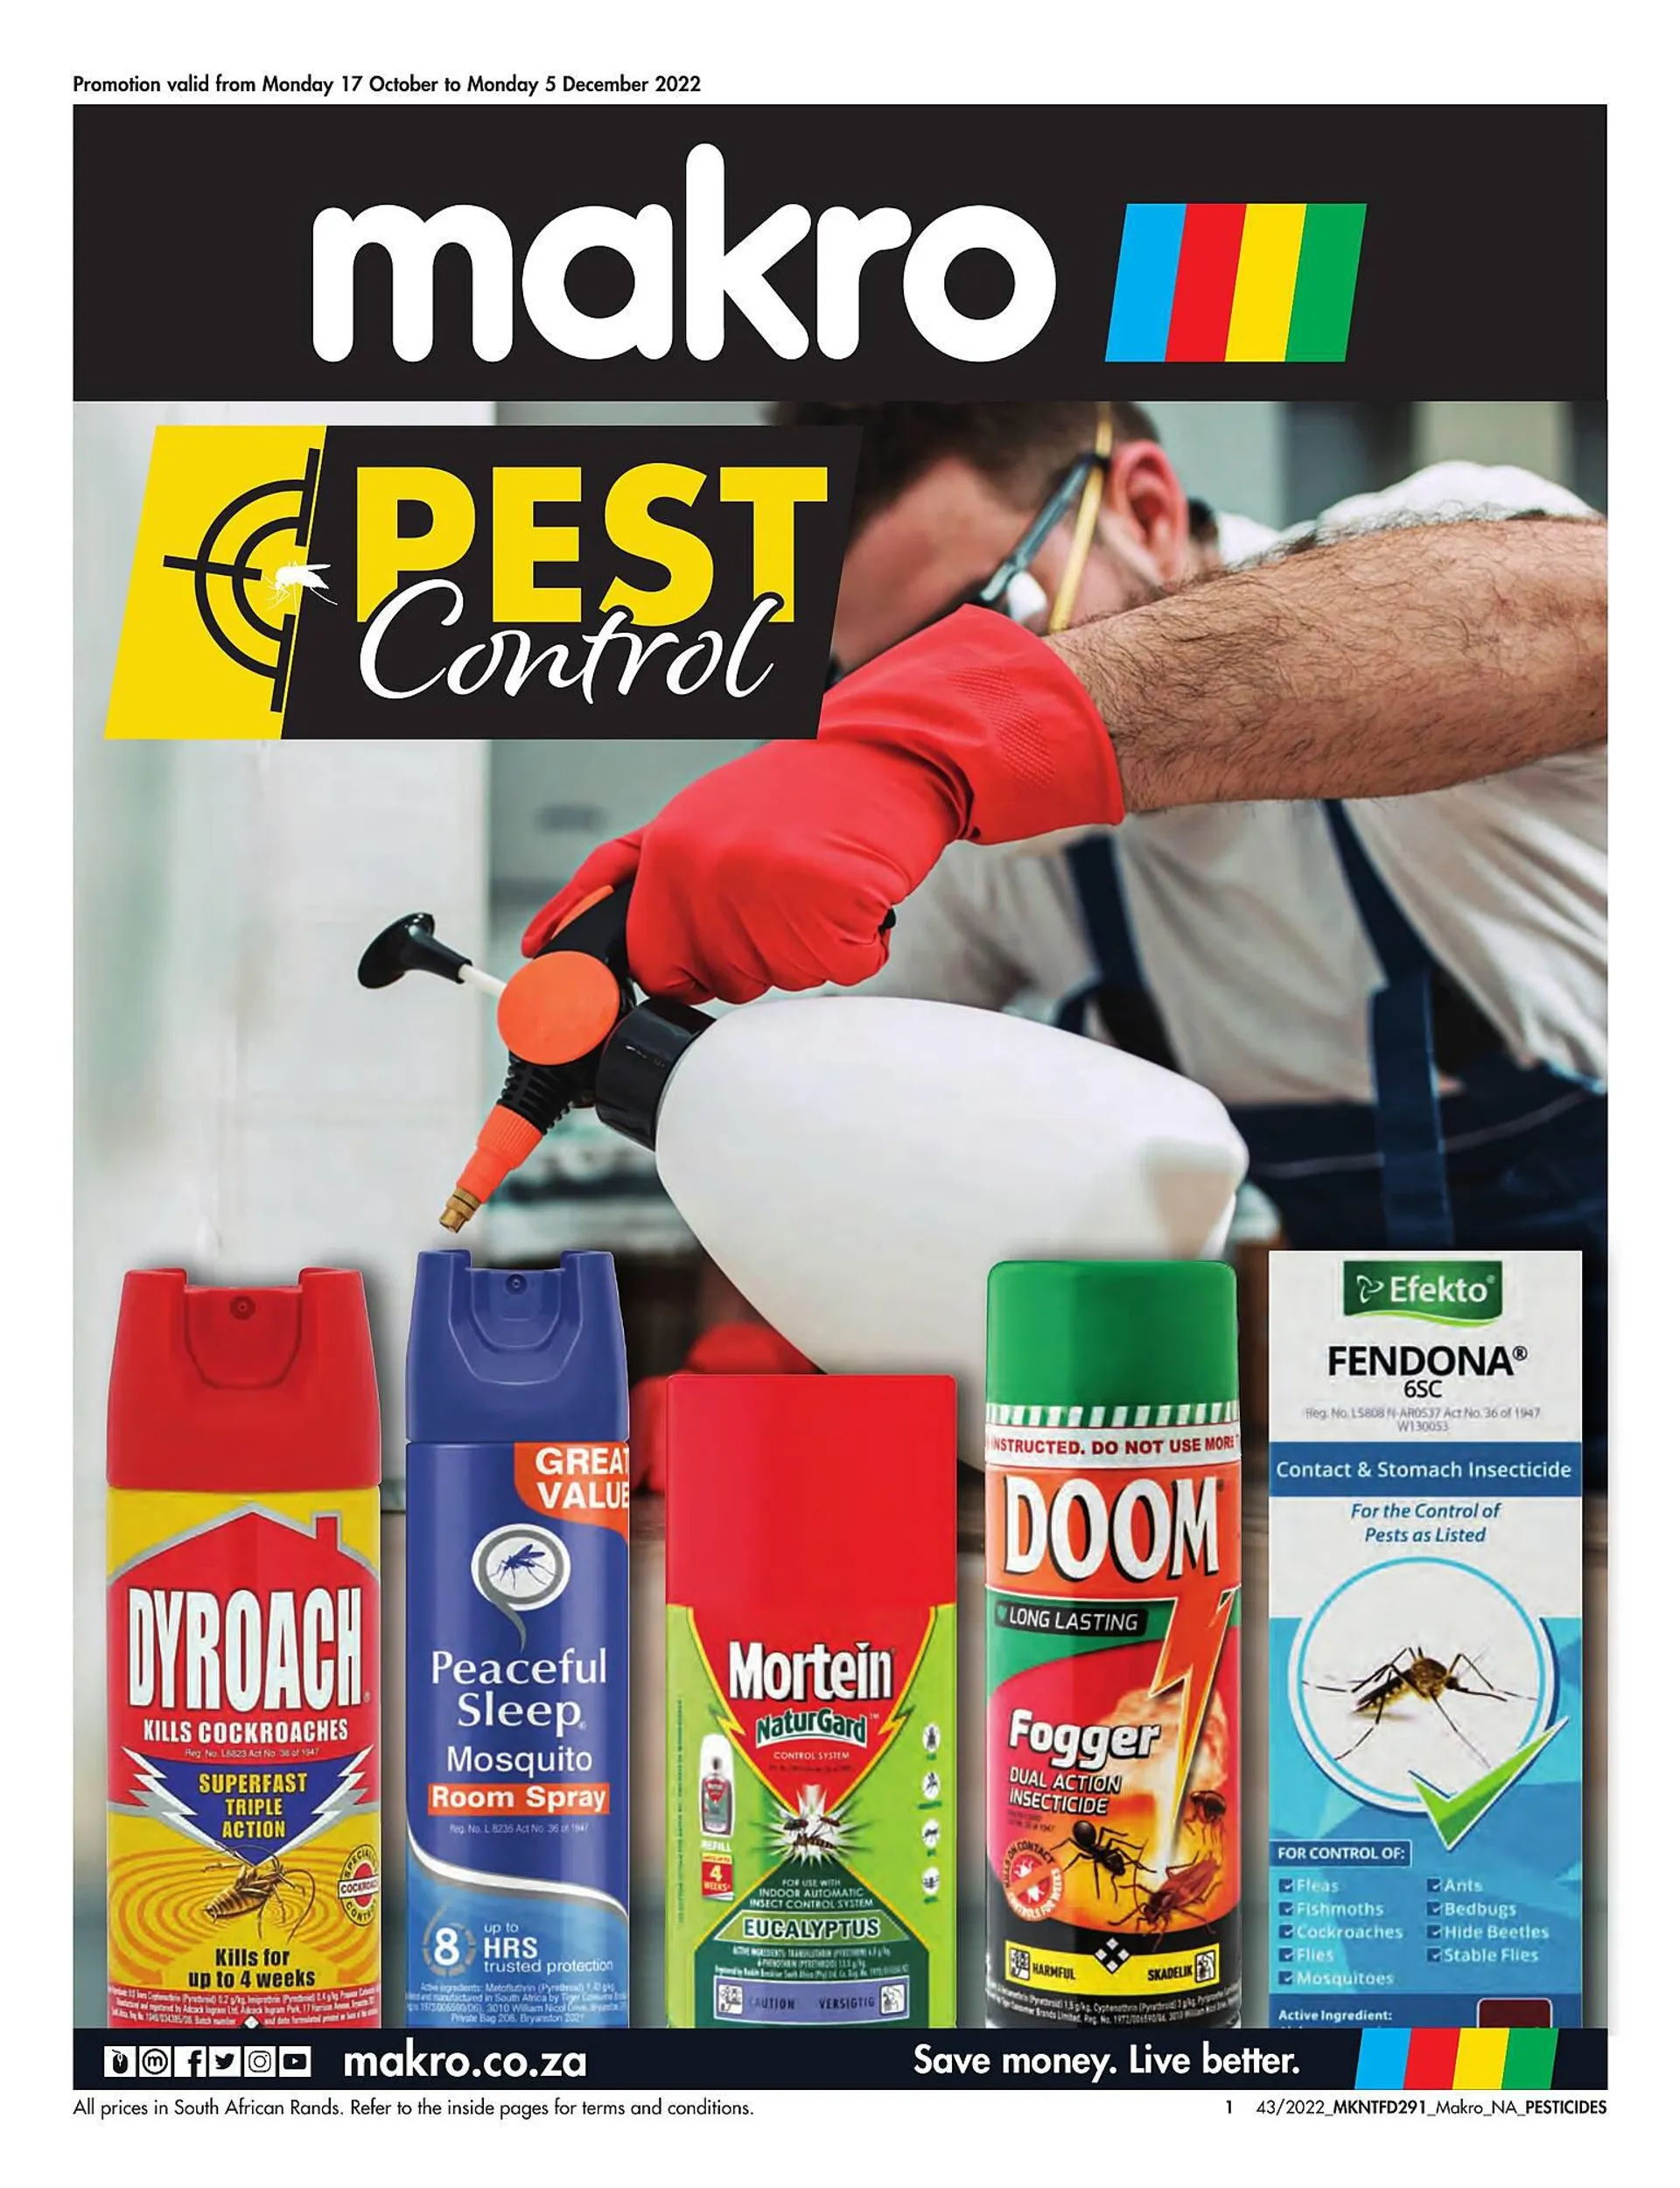 Makro catalogue - Pest Control - 1